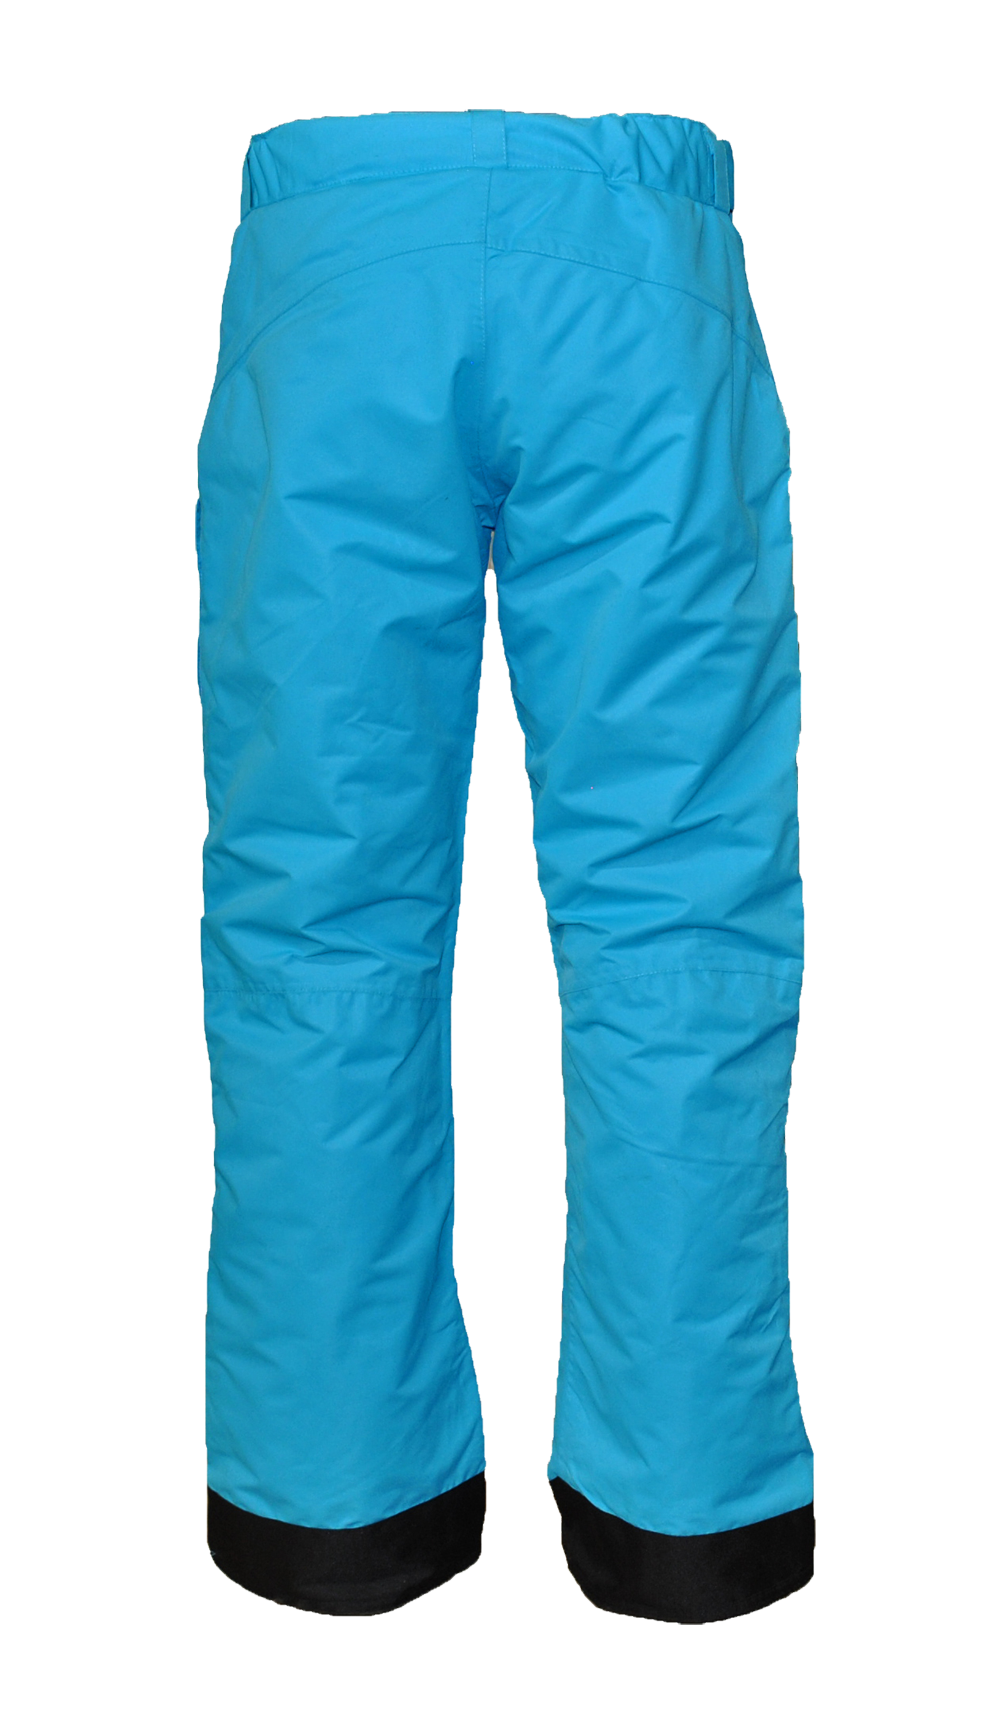 Winter Ski & Board Pants-Ladies Pulse Snow Pant, Turquoise